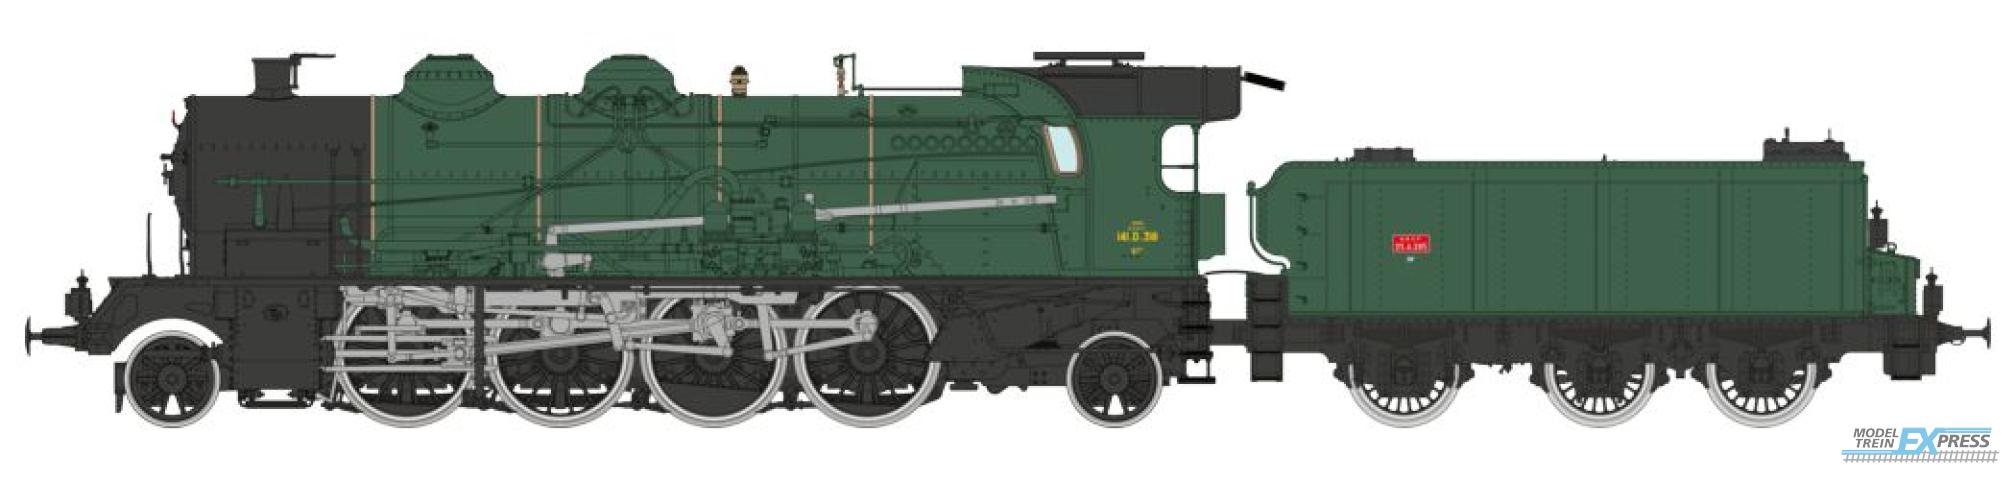 REE models MB-160S 141 D 318 + Tender 25 A 285 Green & Black BADAN SNCF Era III - DCC SOUND & Smoke